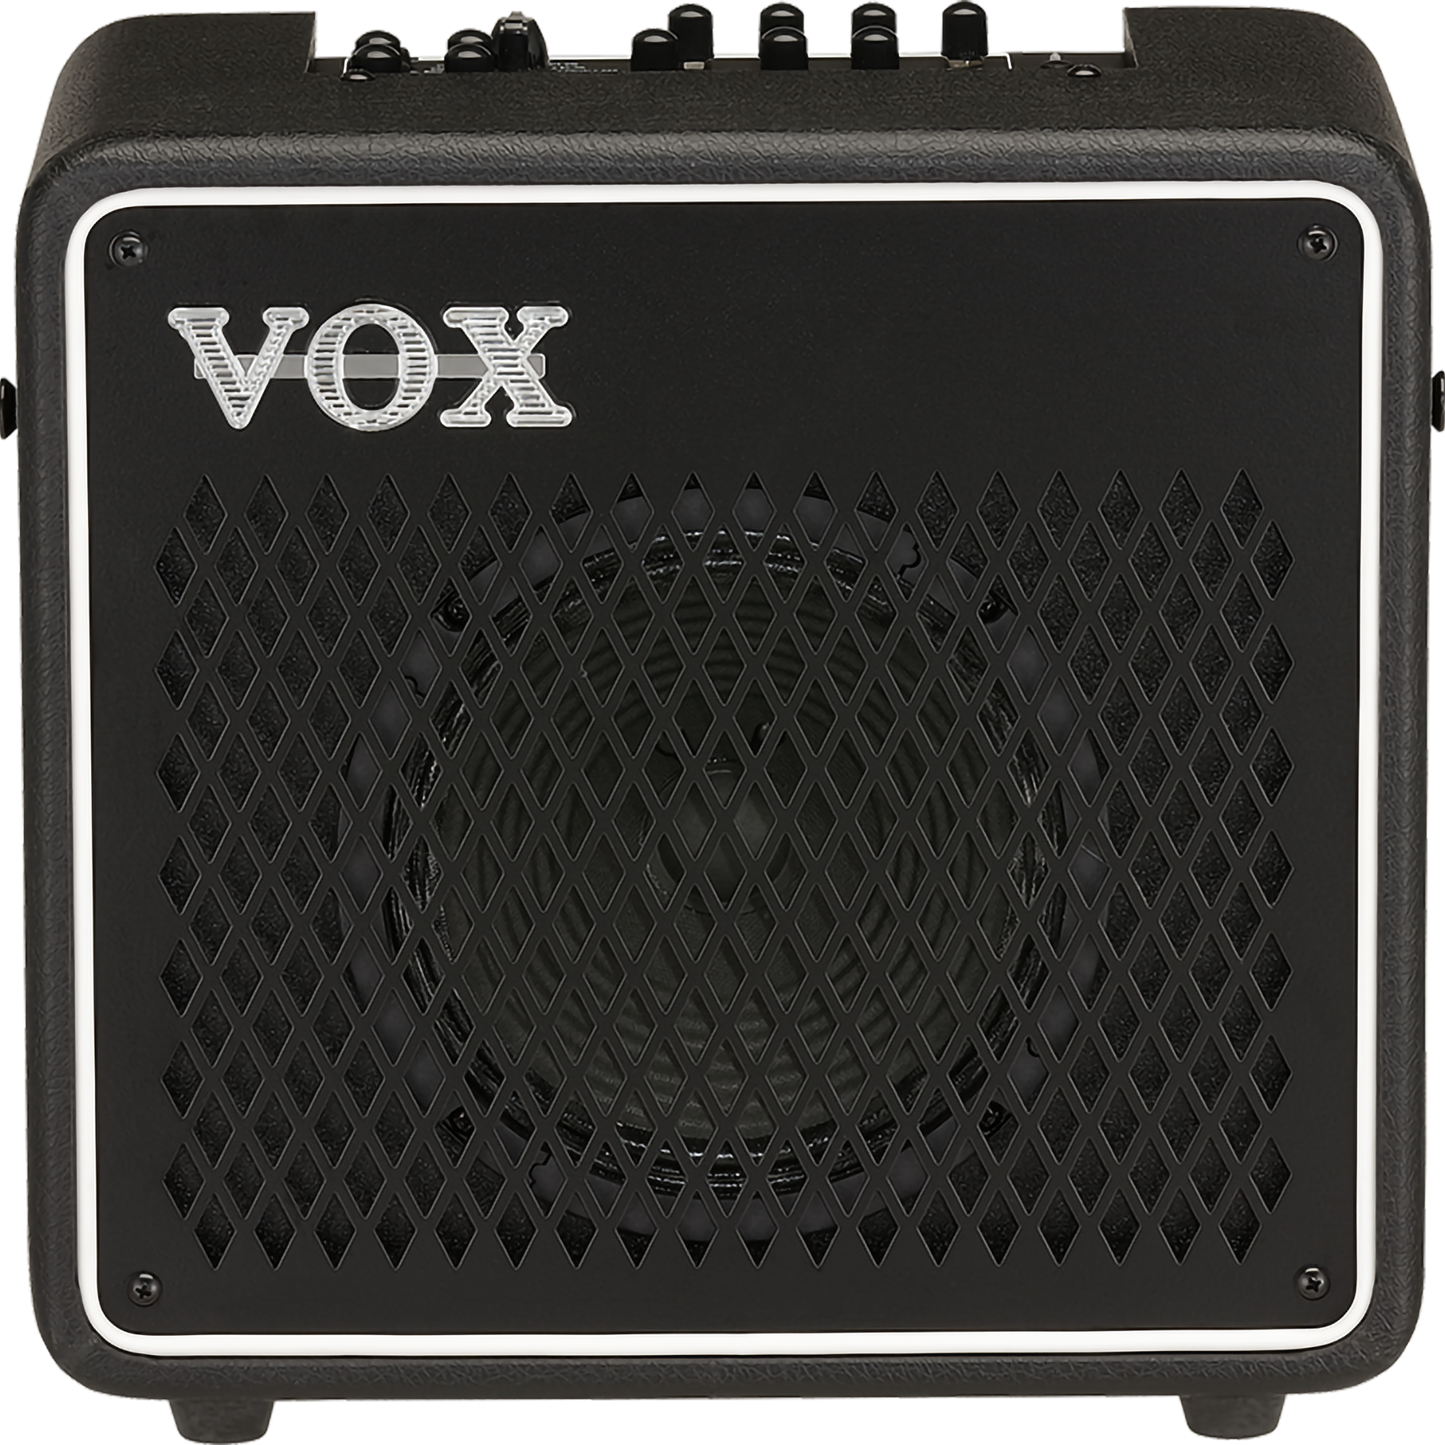 Vox MiniGo 50 Watt 1x8” Combo Amplifier